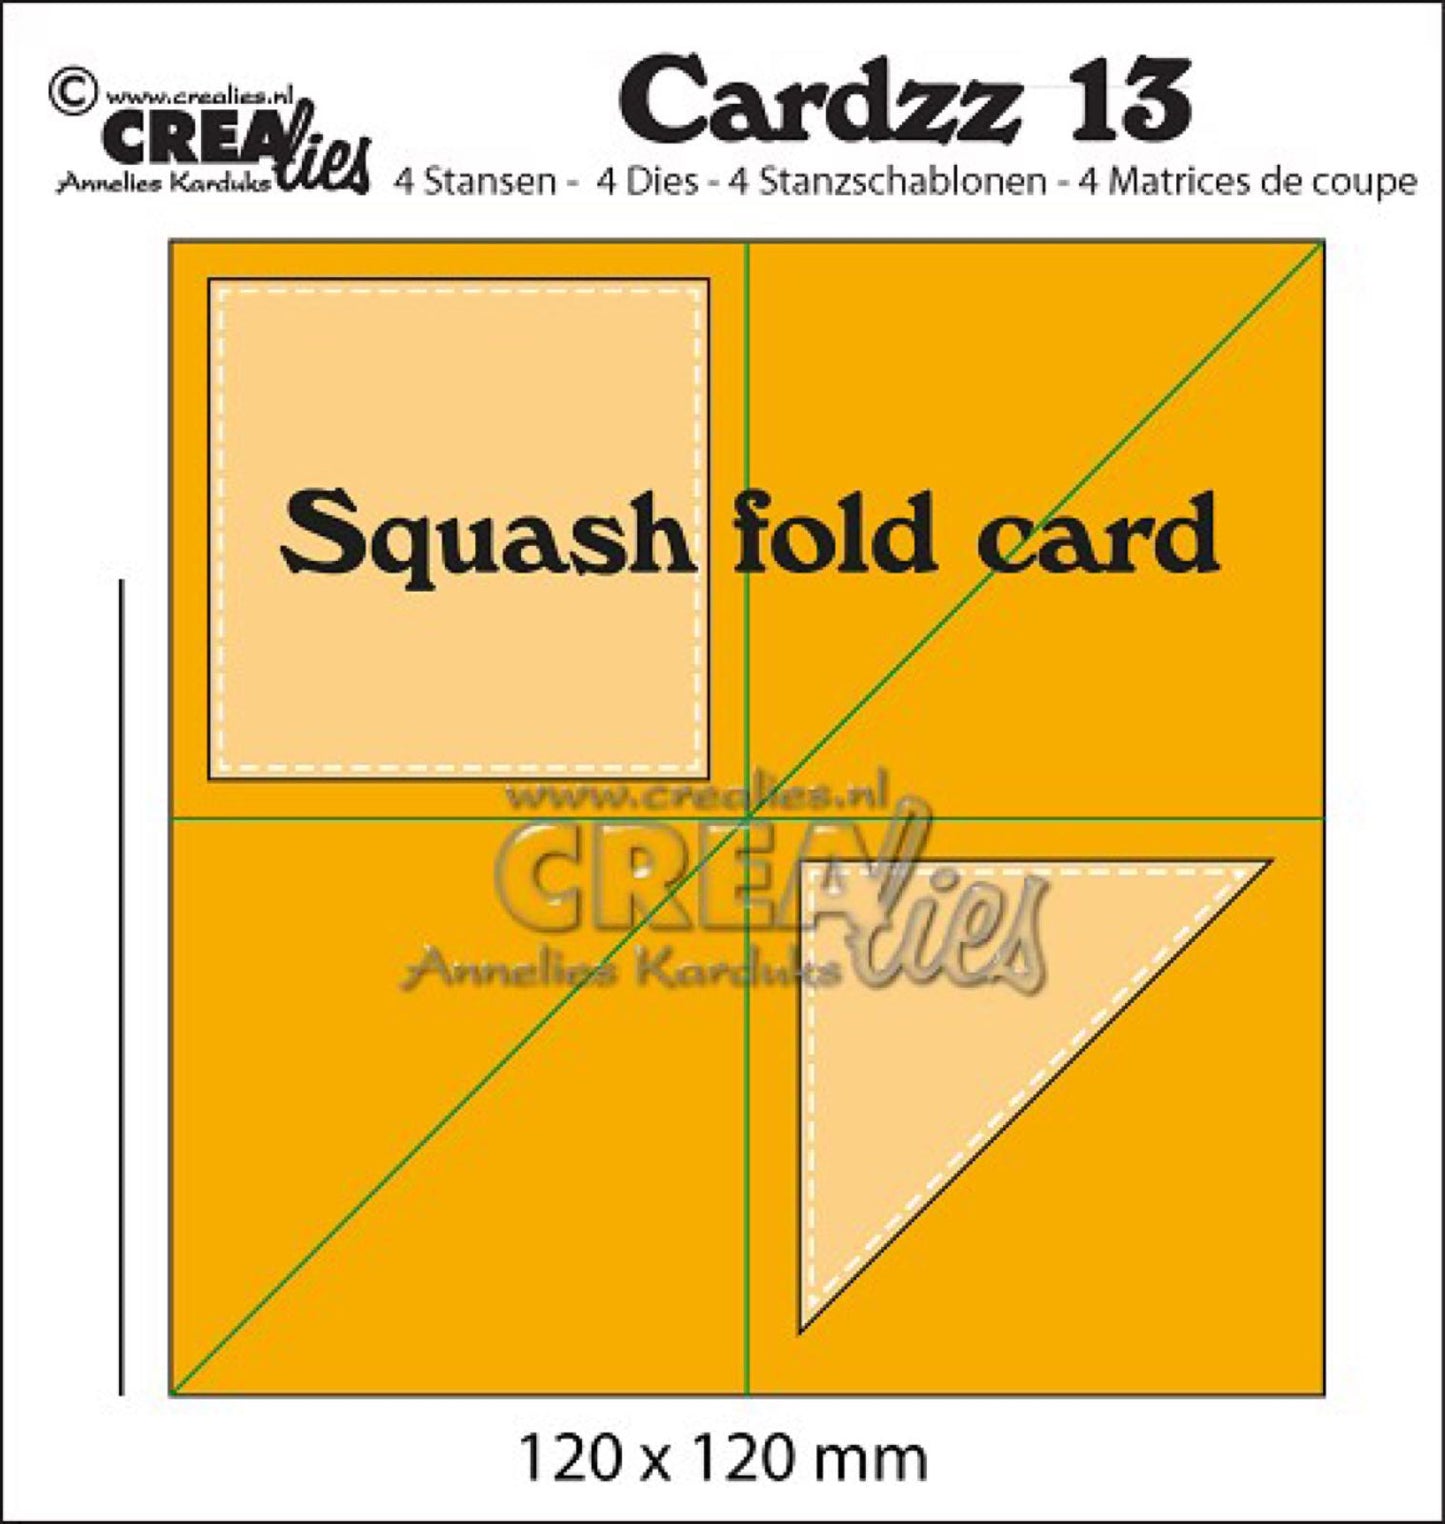 Crealies cardzz 13, Squash fold card / twist & pop up card  13A